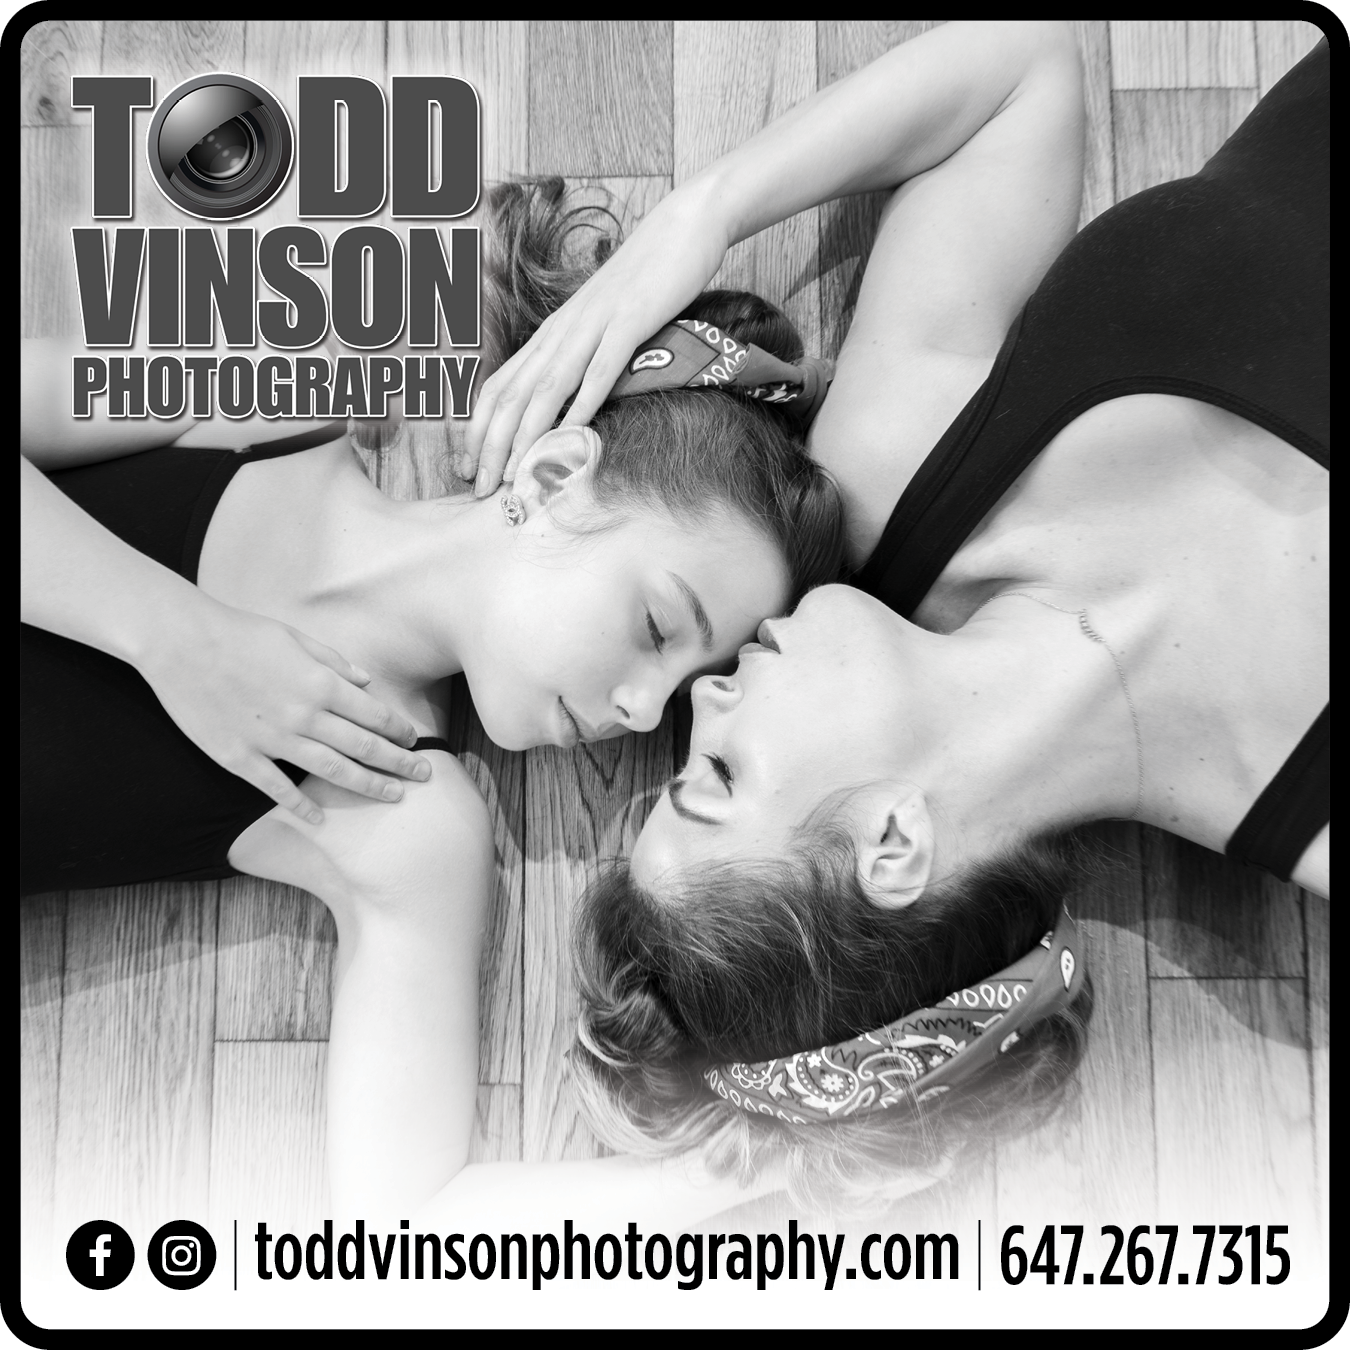 Todd Vinson Photography